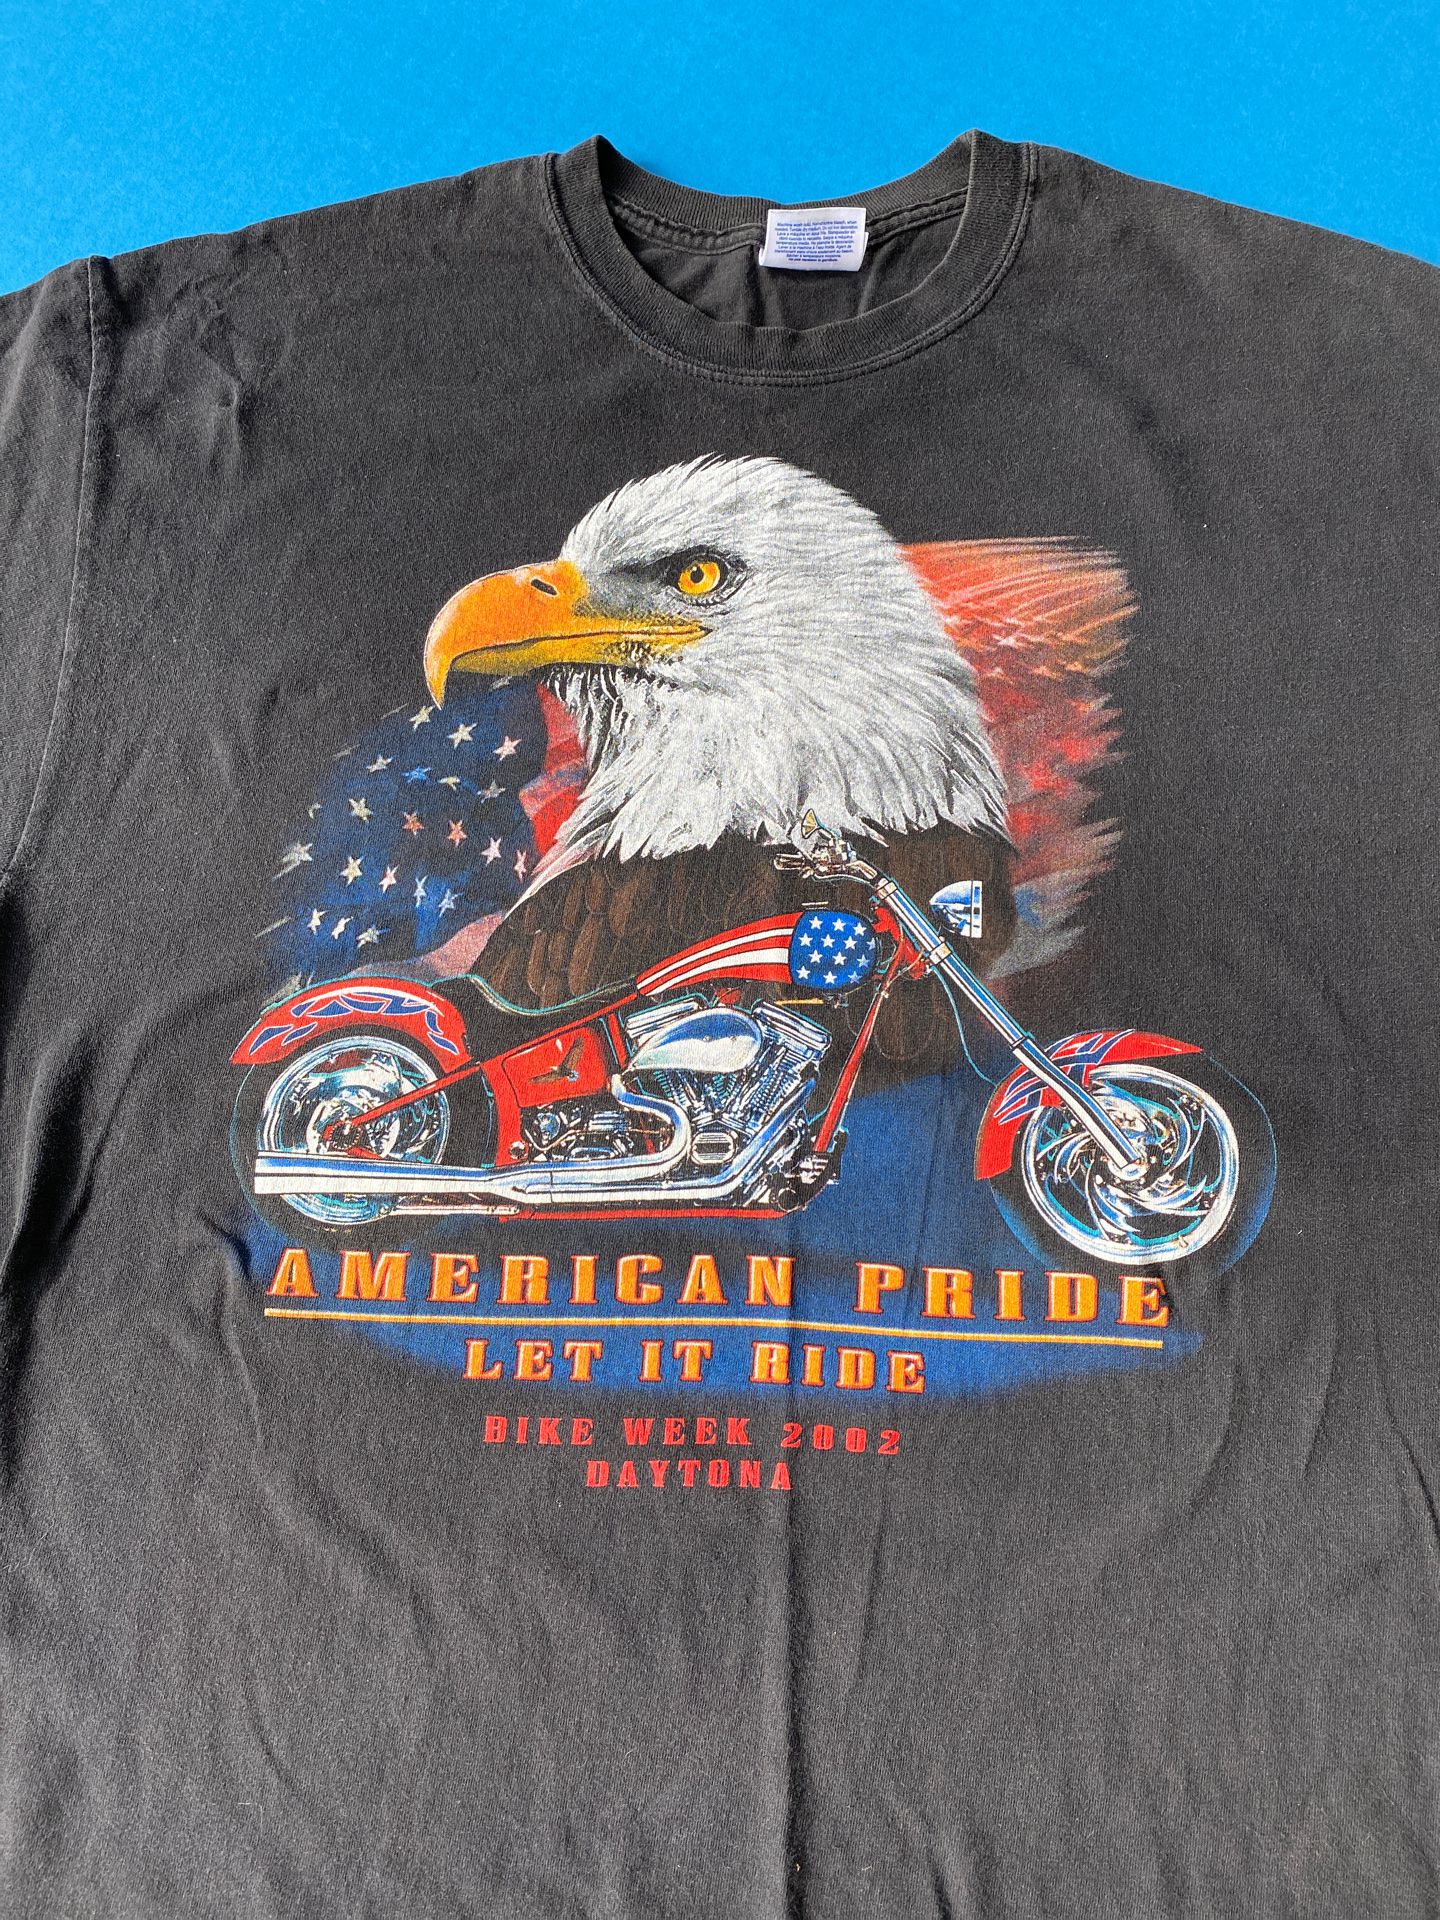 Harley Davidson tee shirt size XL. Daytona Bike Week 2002